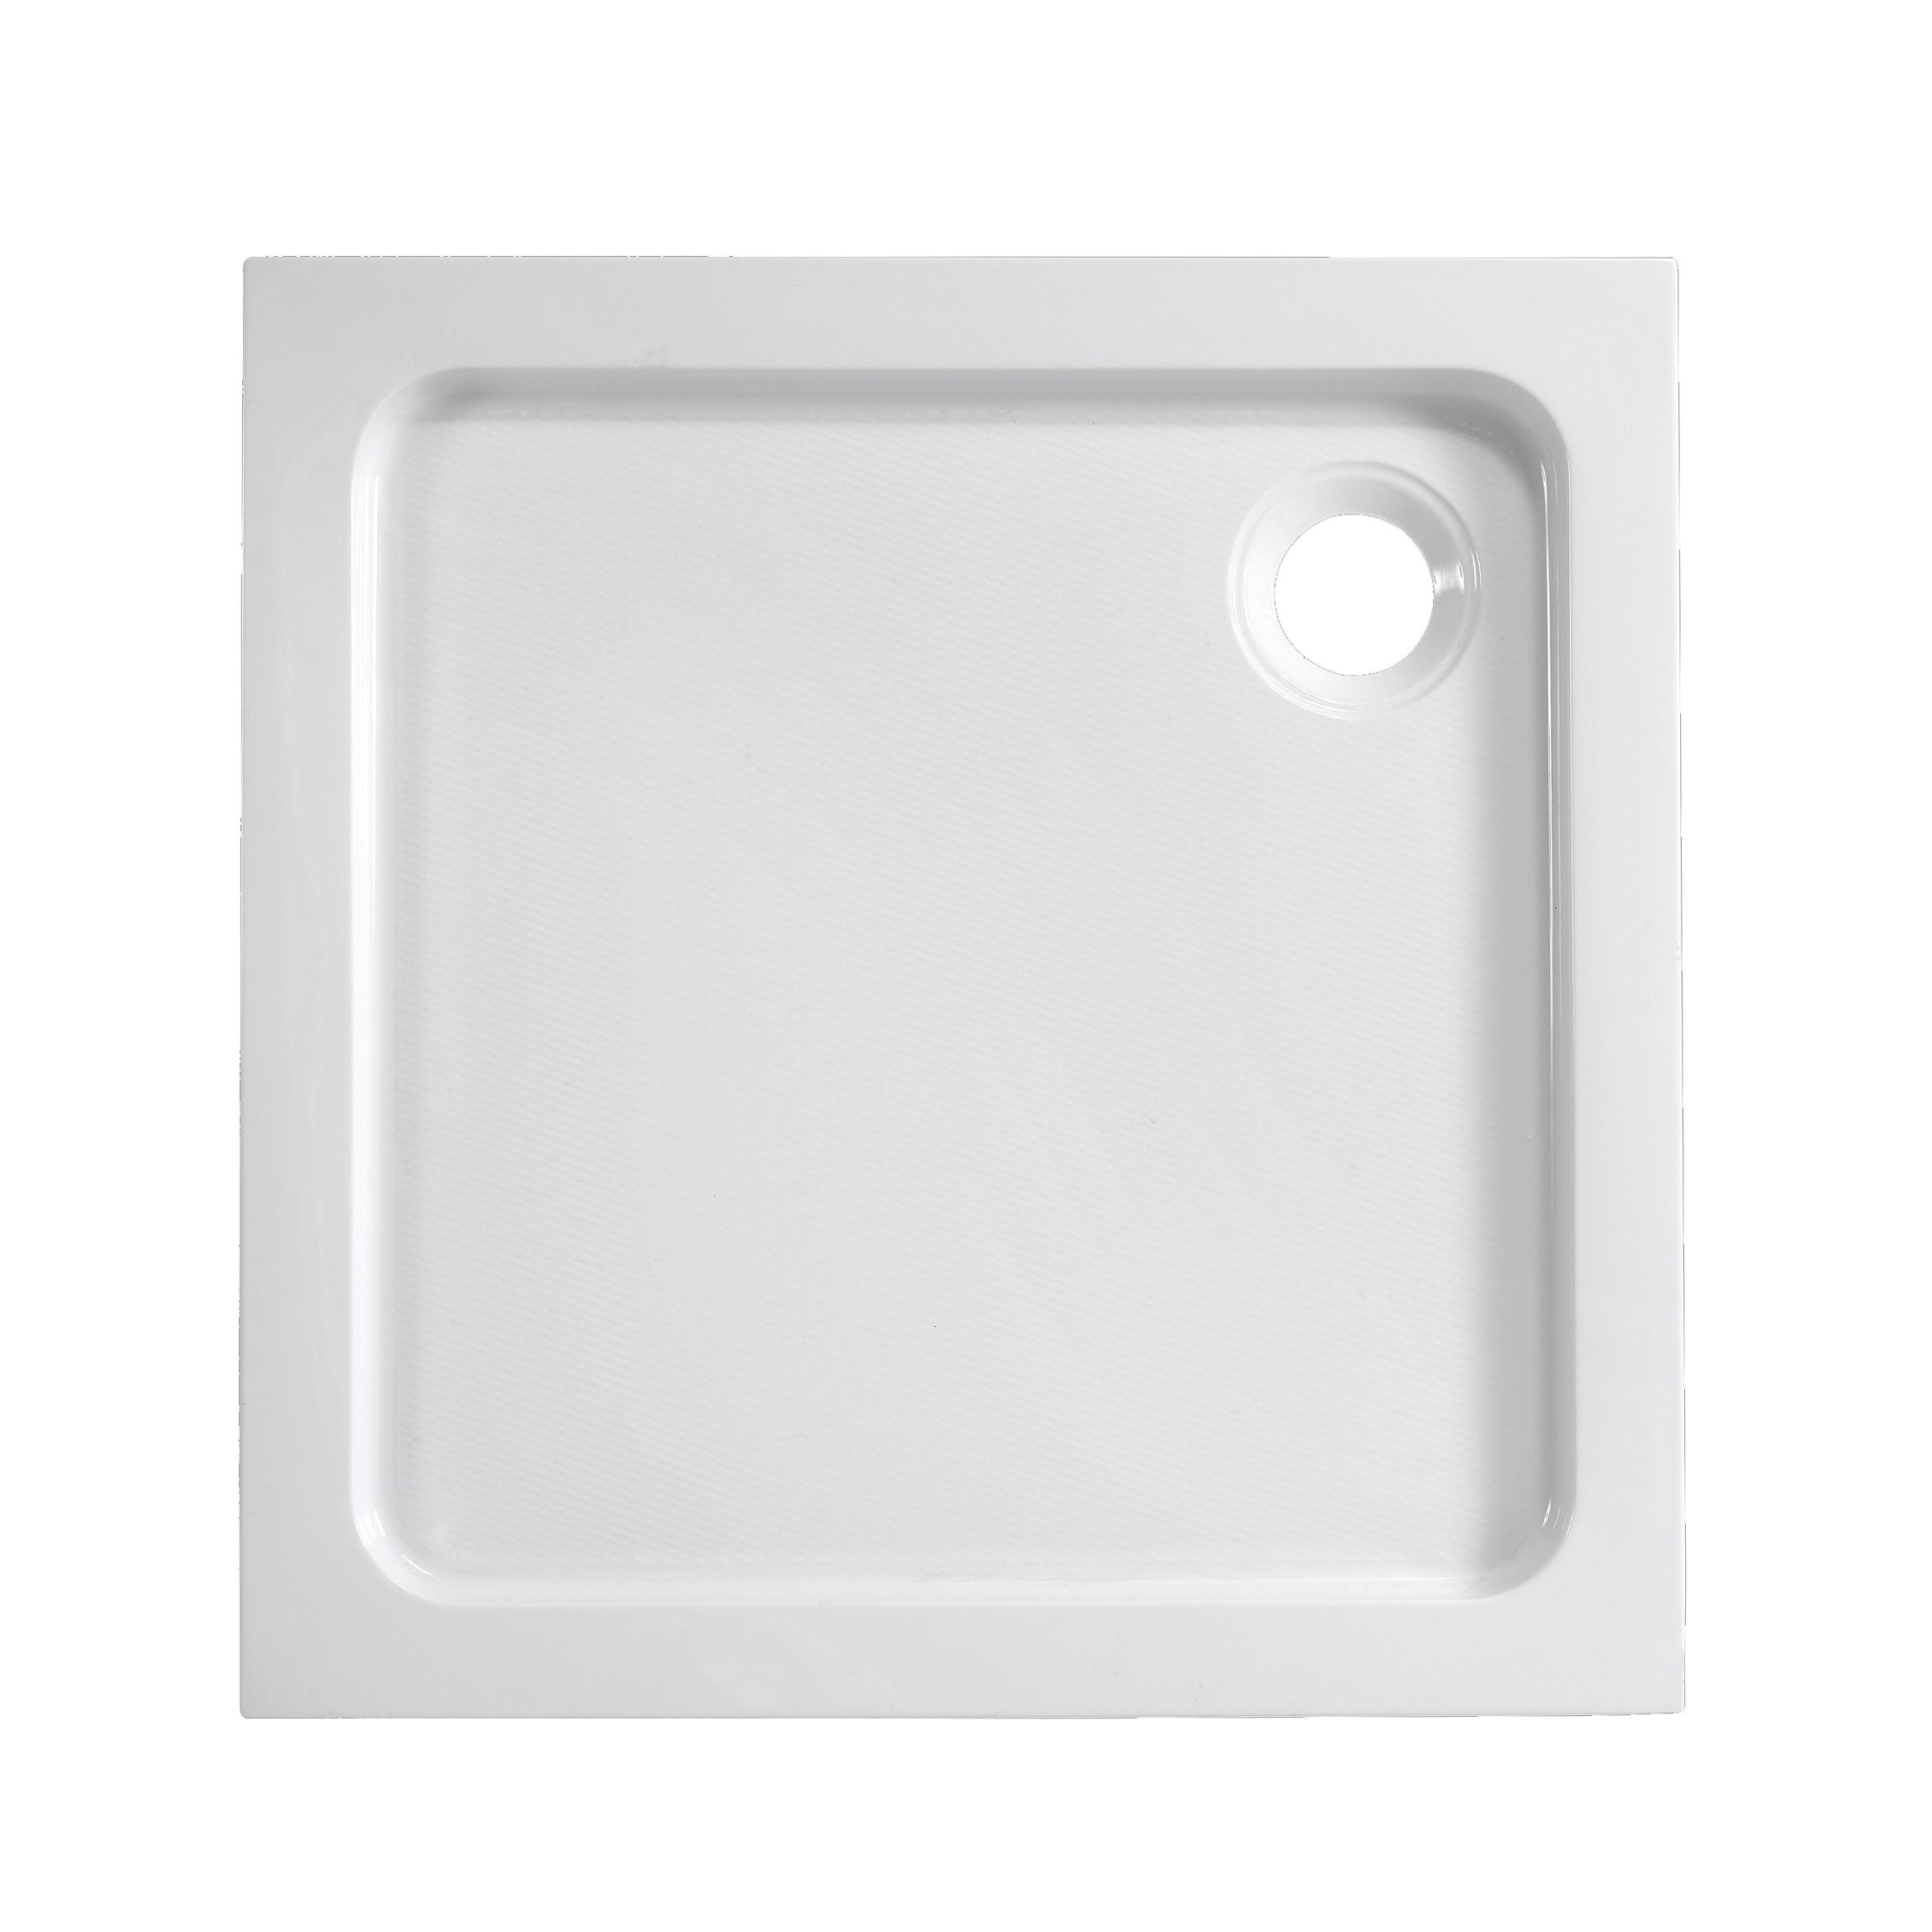 Dommel Gloss White Square Corner drain Shower tray (L)800mm (W)800mm (H) 150mm